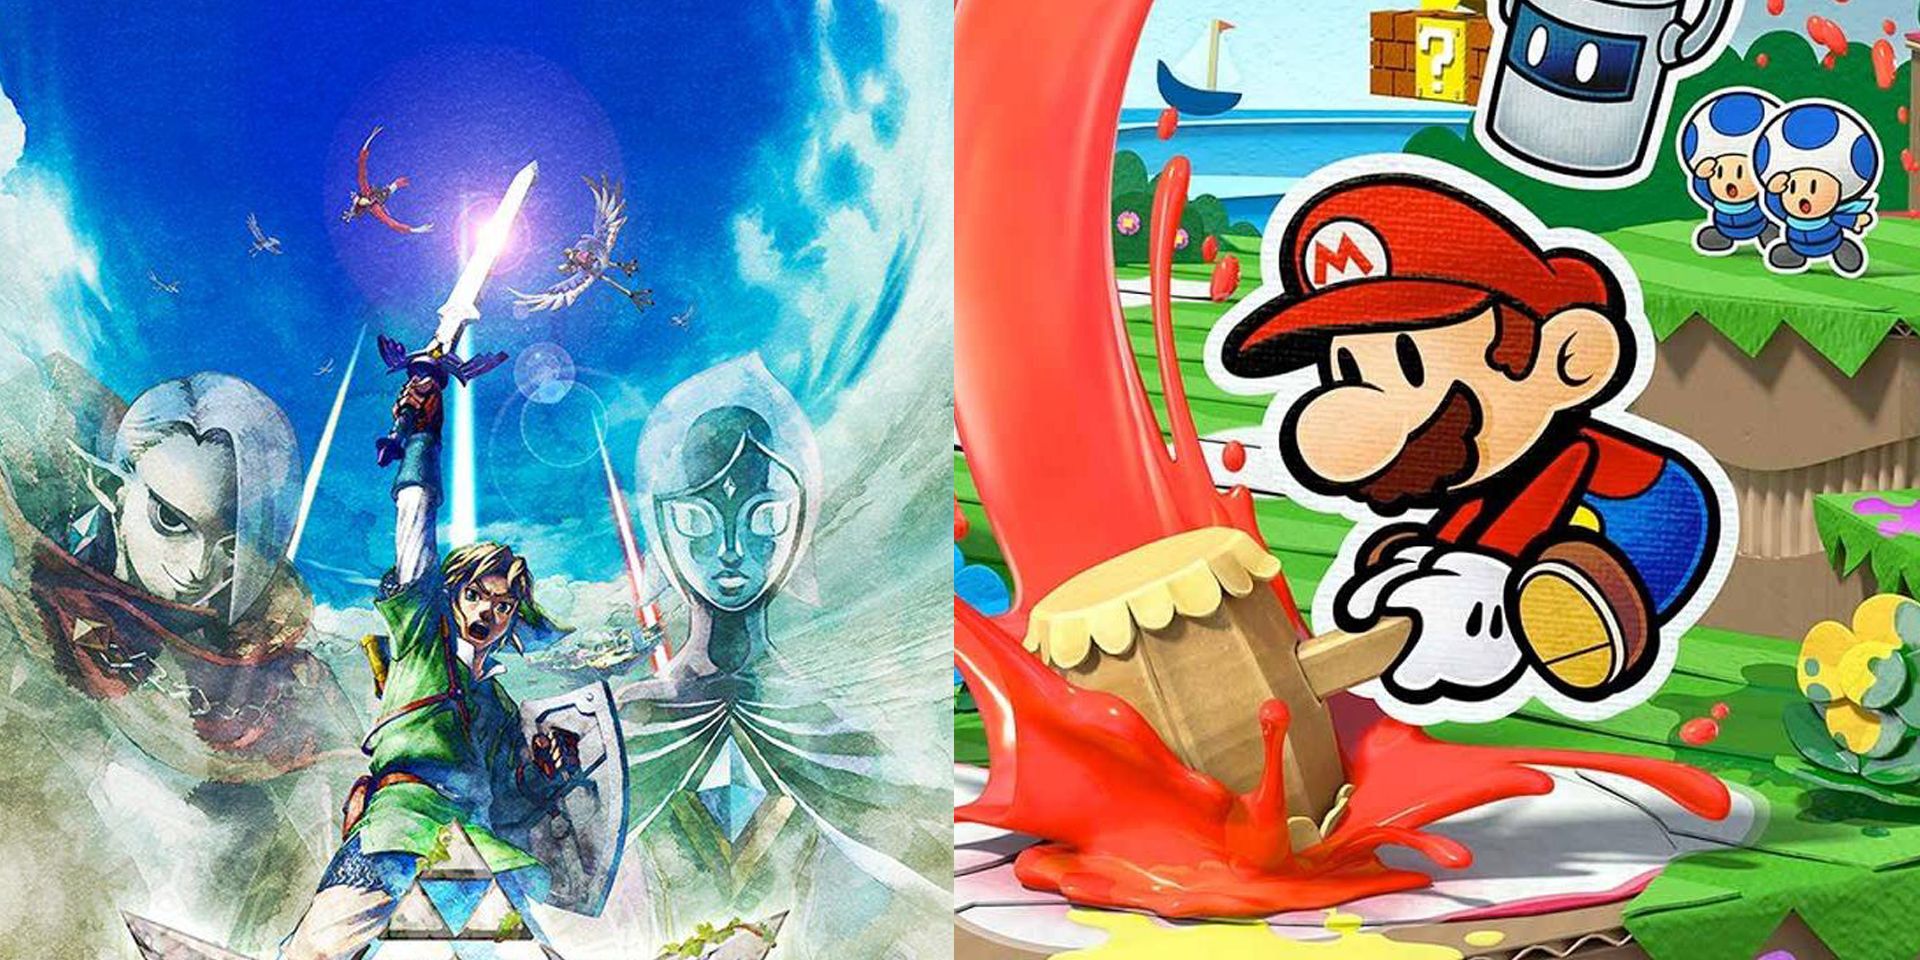 A split image of Legend of Zelda's Link wielding a sword and Mario splattering paint with a hammer